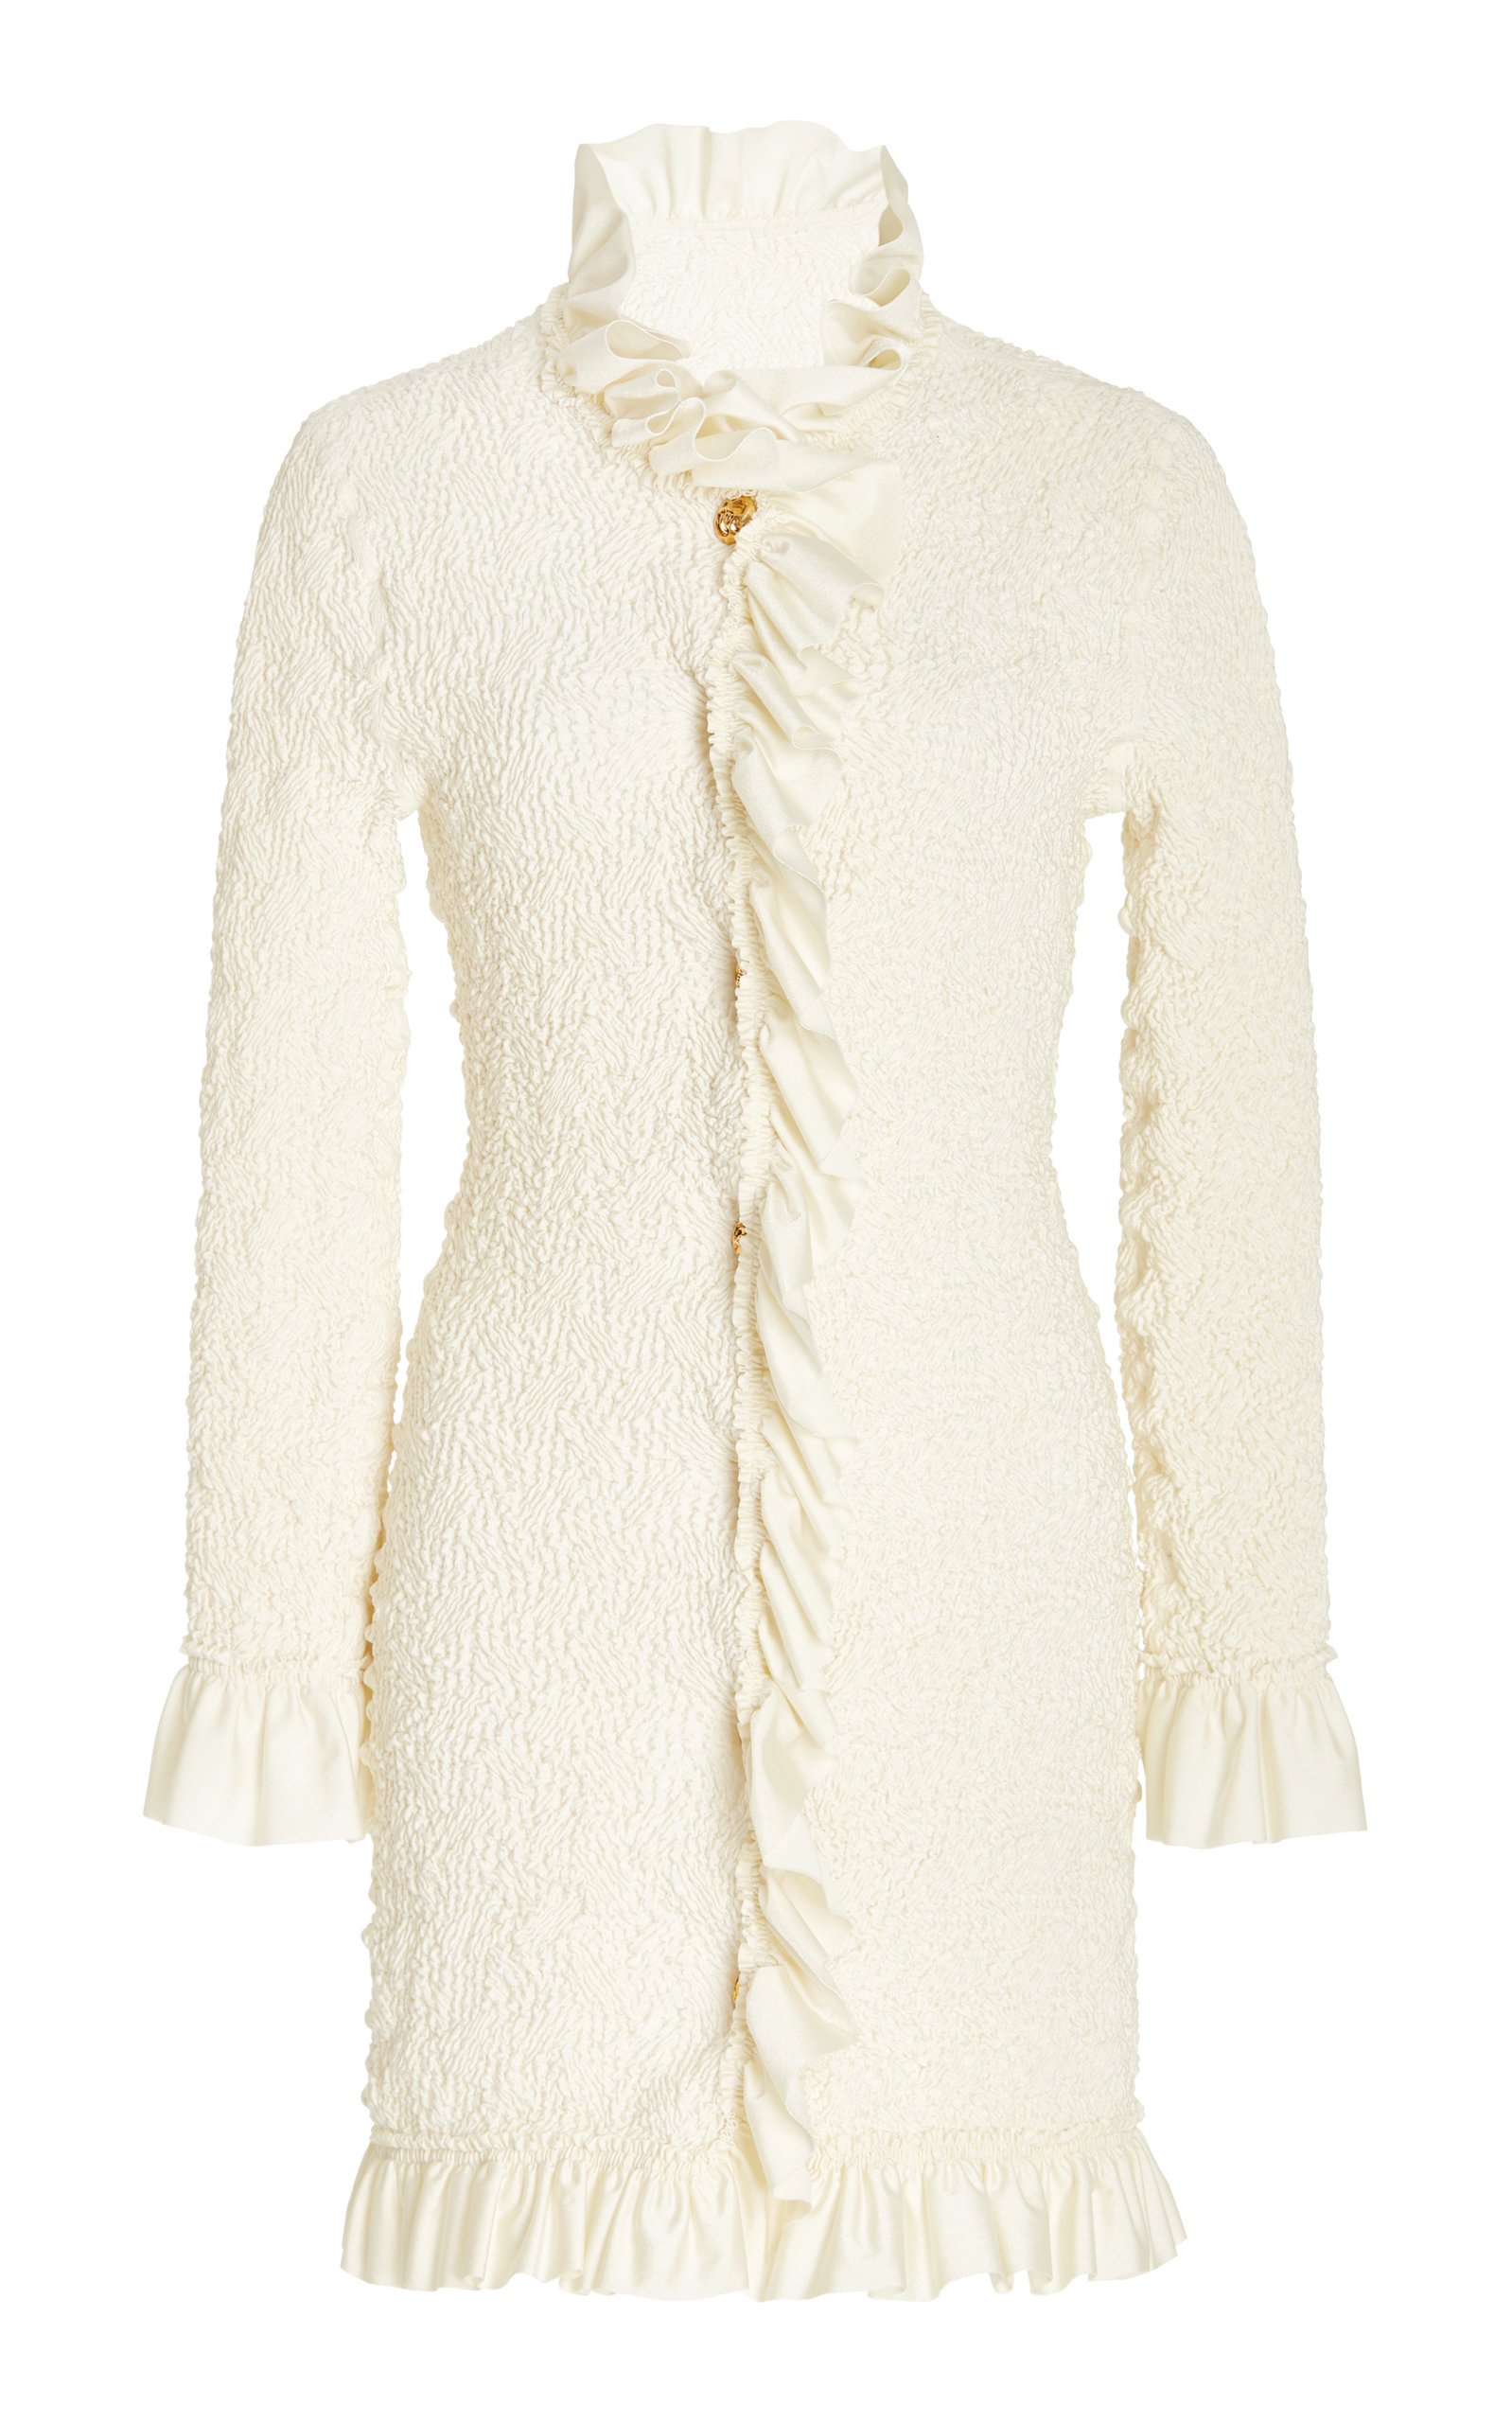 Alexander Wang - Women's Ruffled Smocked Jersey Jacket Dress - White - L - Moda Operandi